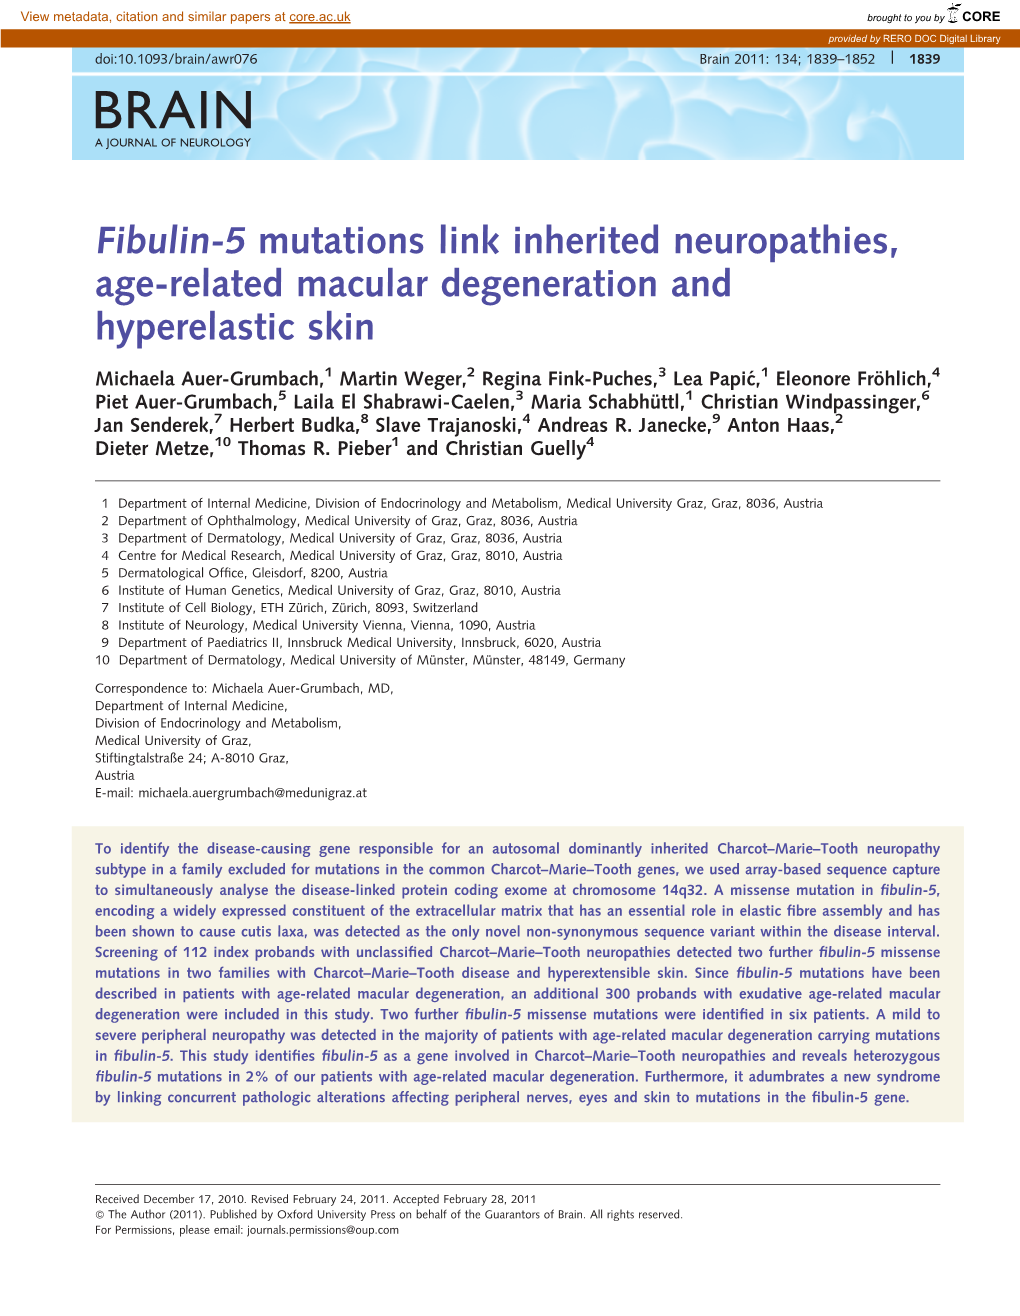 Fibulin-5 Mutations Link Inherited Neuropathies, Age-Related Macular Degeneration and Hyperelastic Skin